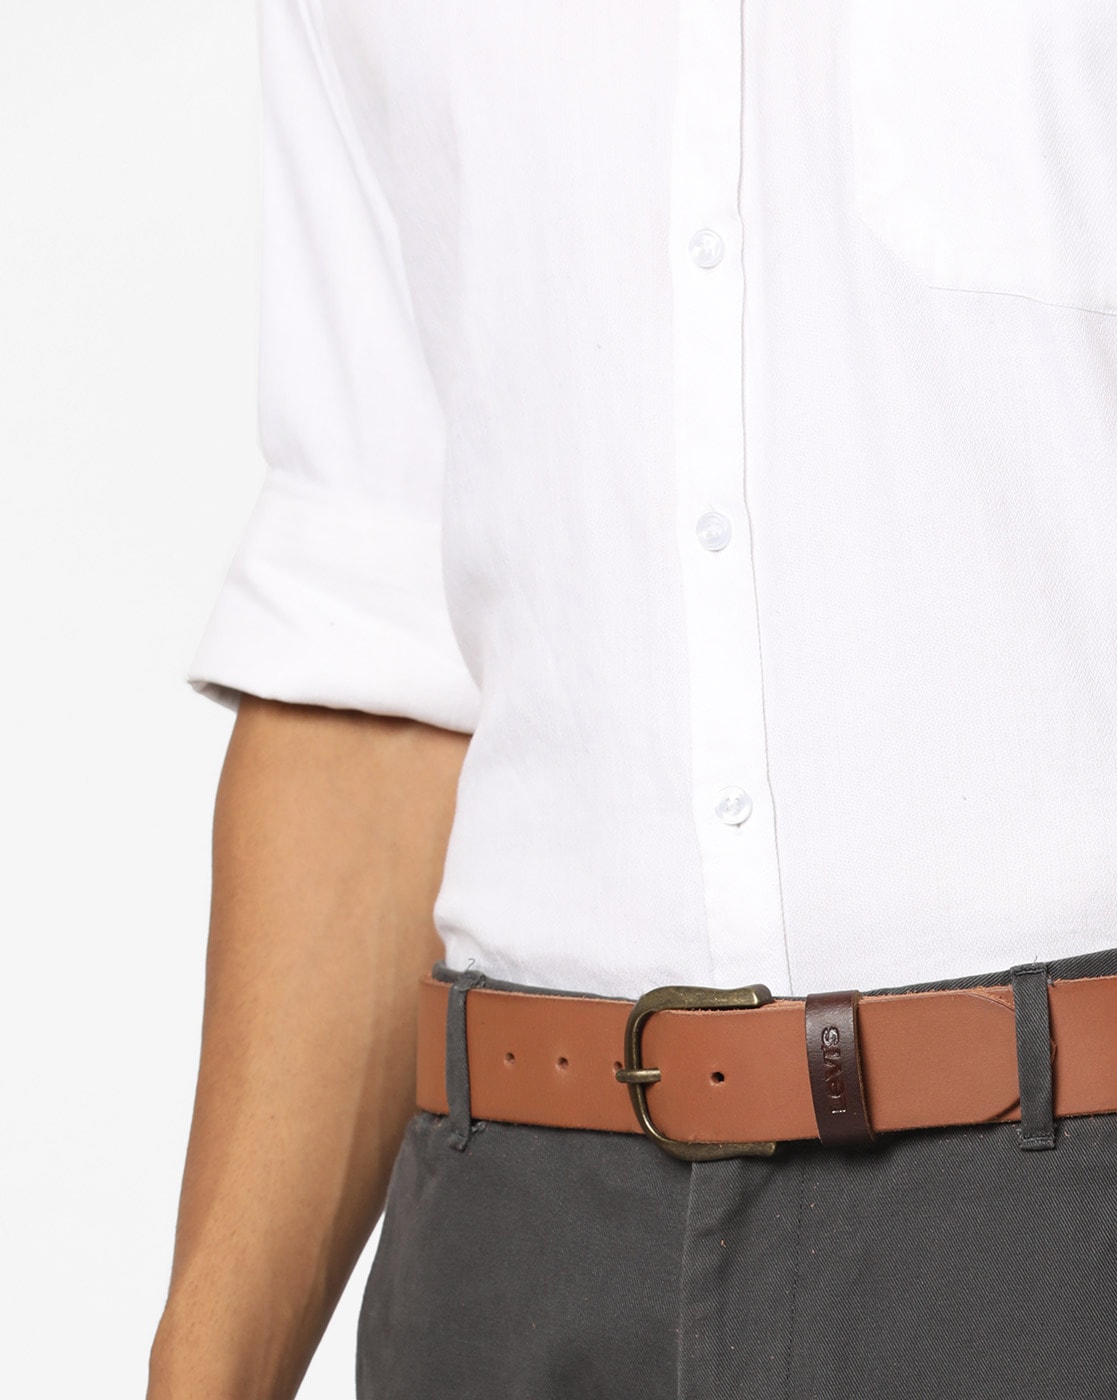 Buy Brown Belts for Men by LEVIS Online 